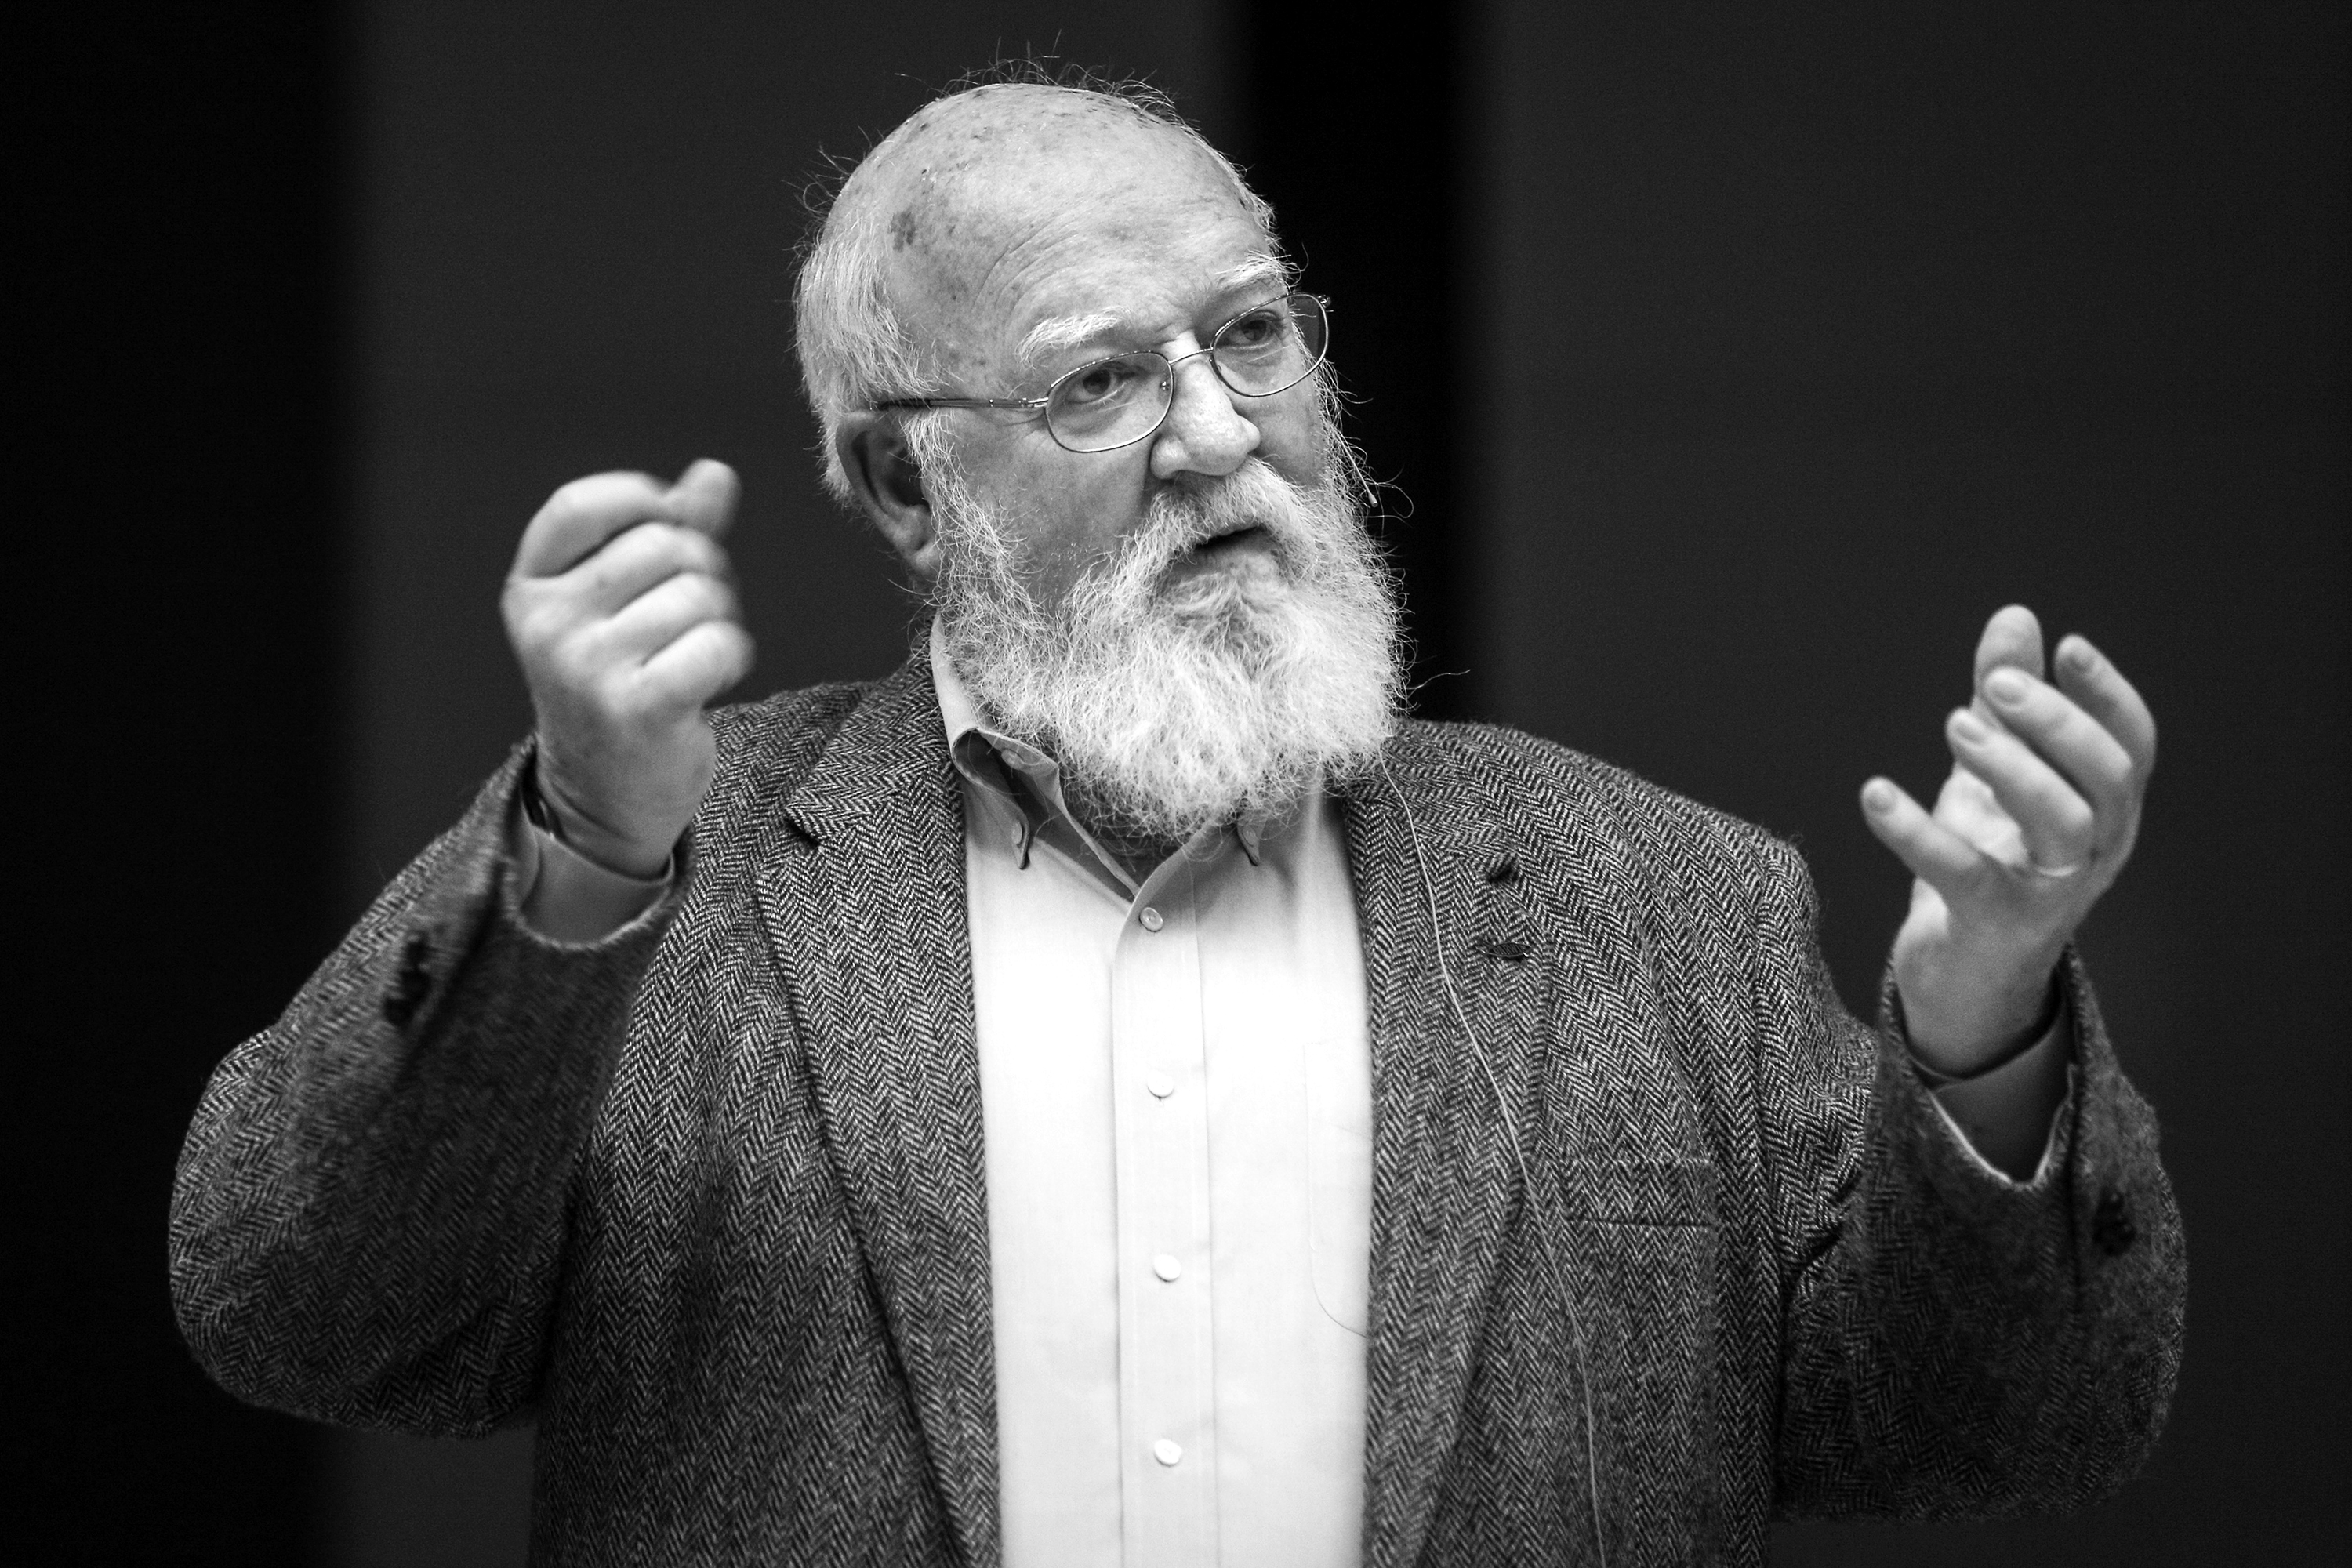 The late Daniel Dennett on consciousness, faith, and more